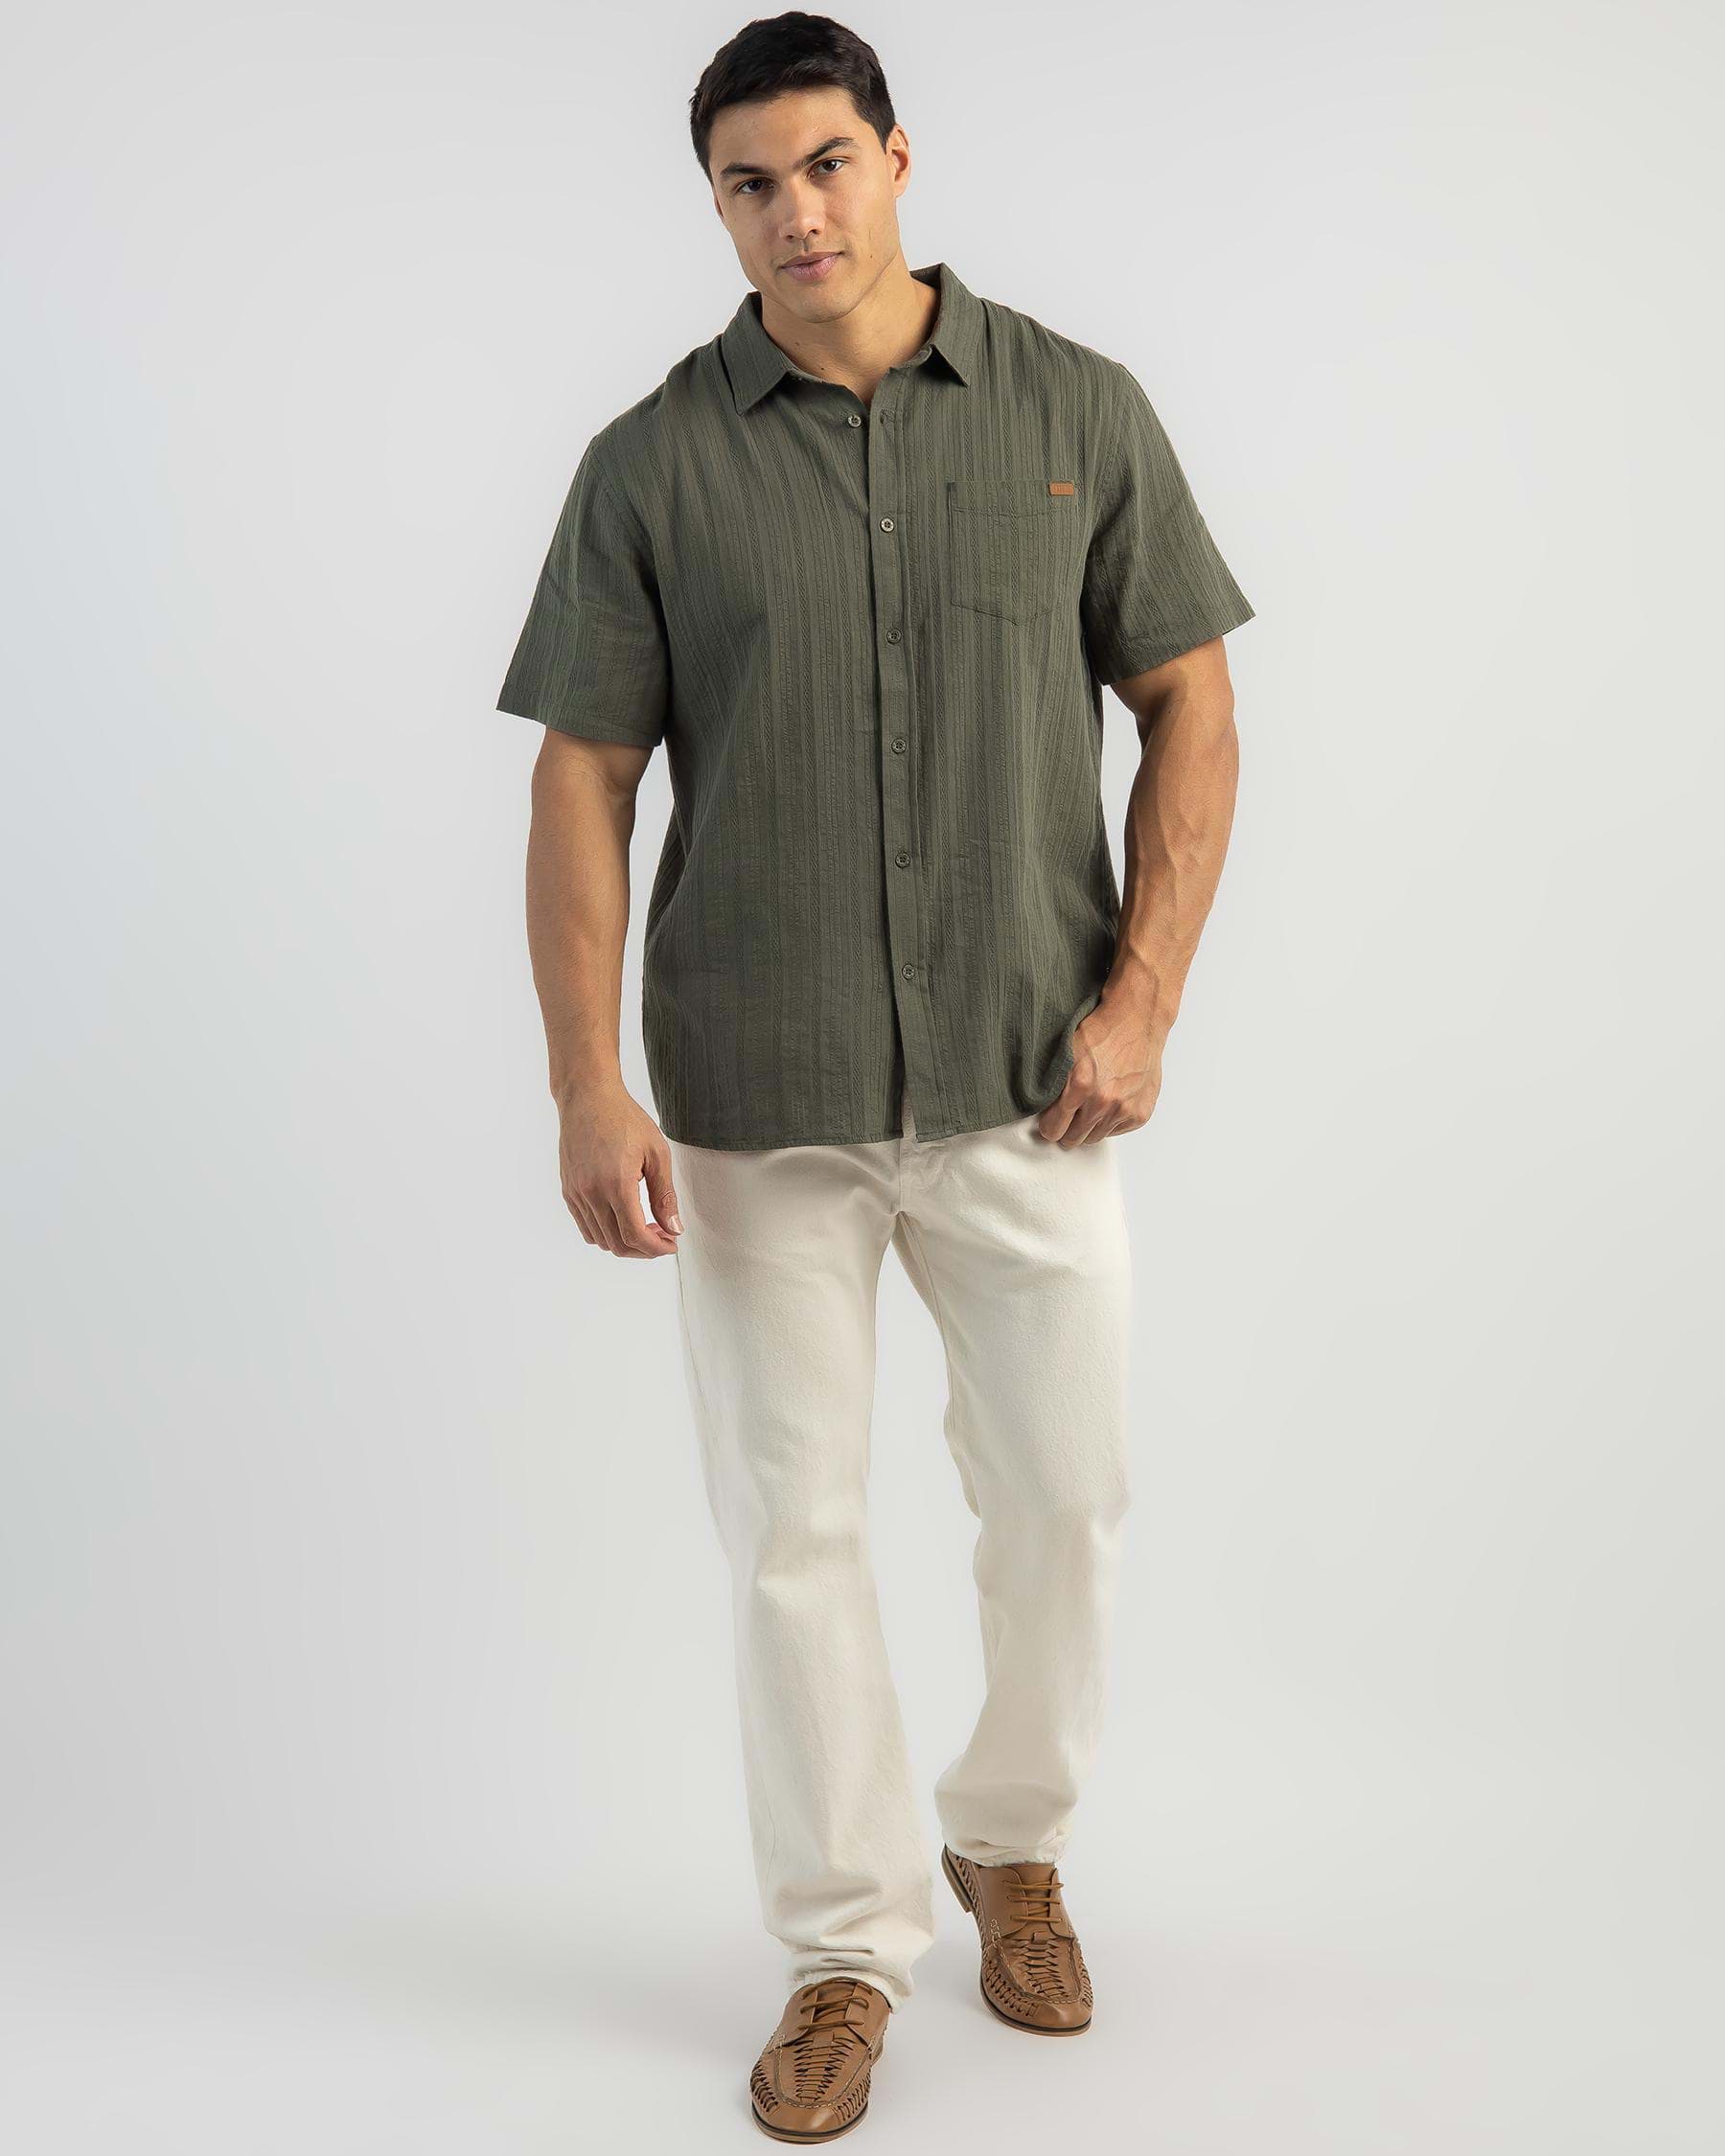 Skylark Novella Short Sleeve Shirt In Army Green - Fast Shipping & Easy ...